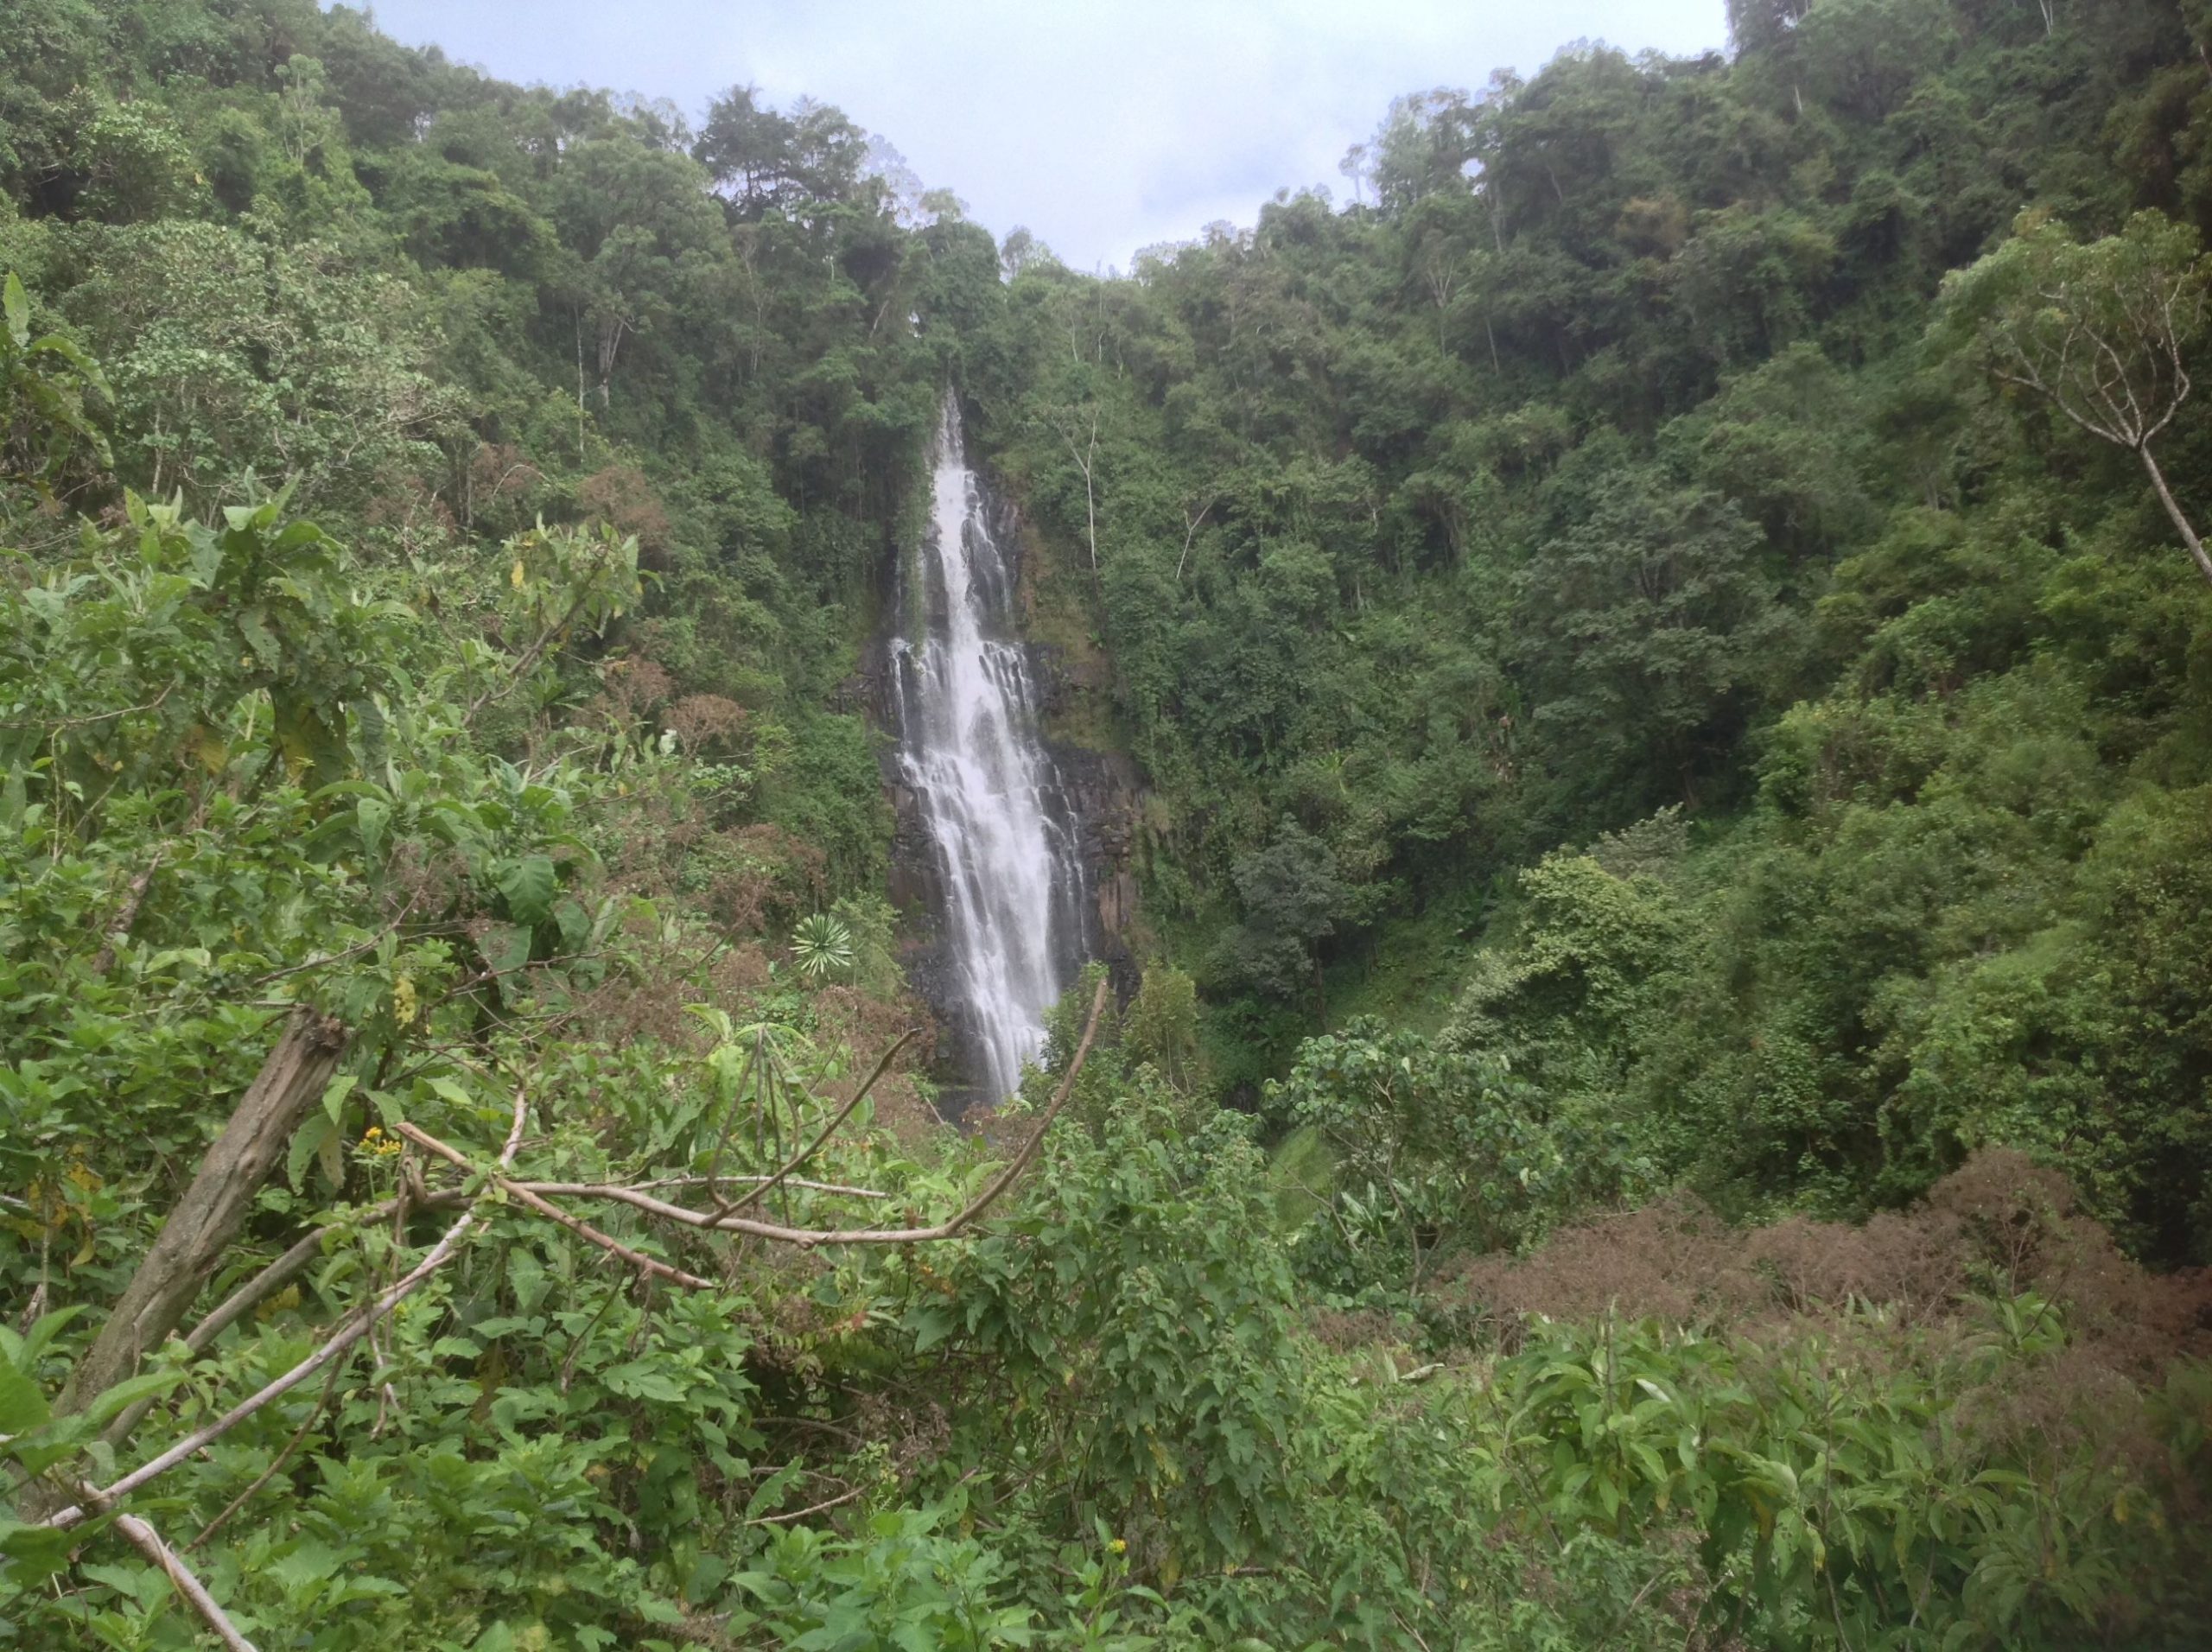 Zania waterfalls in Kenya